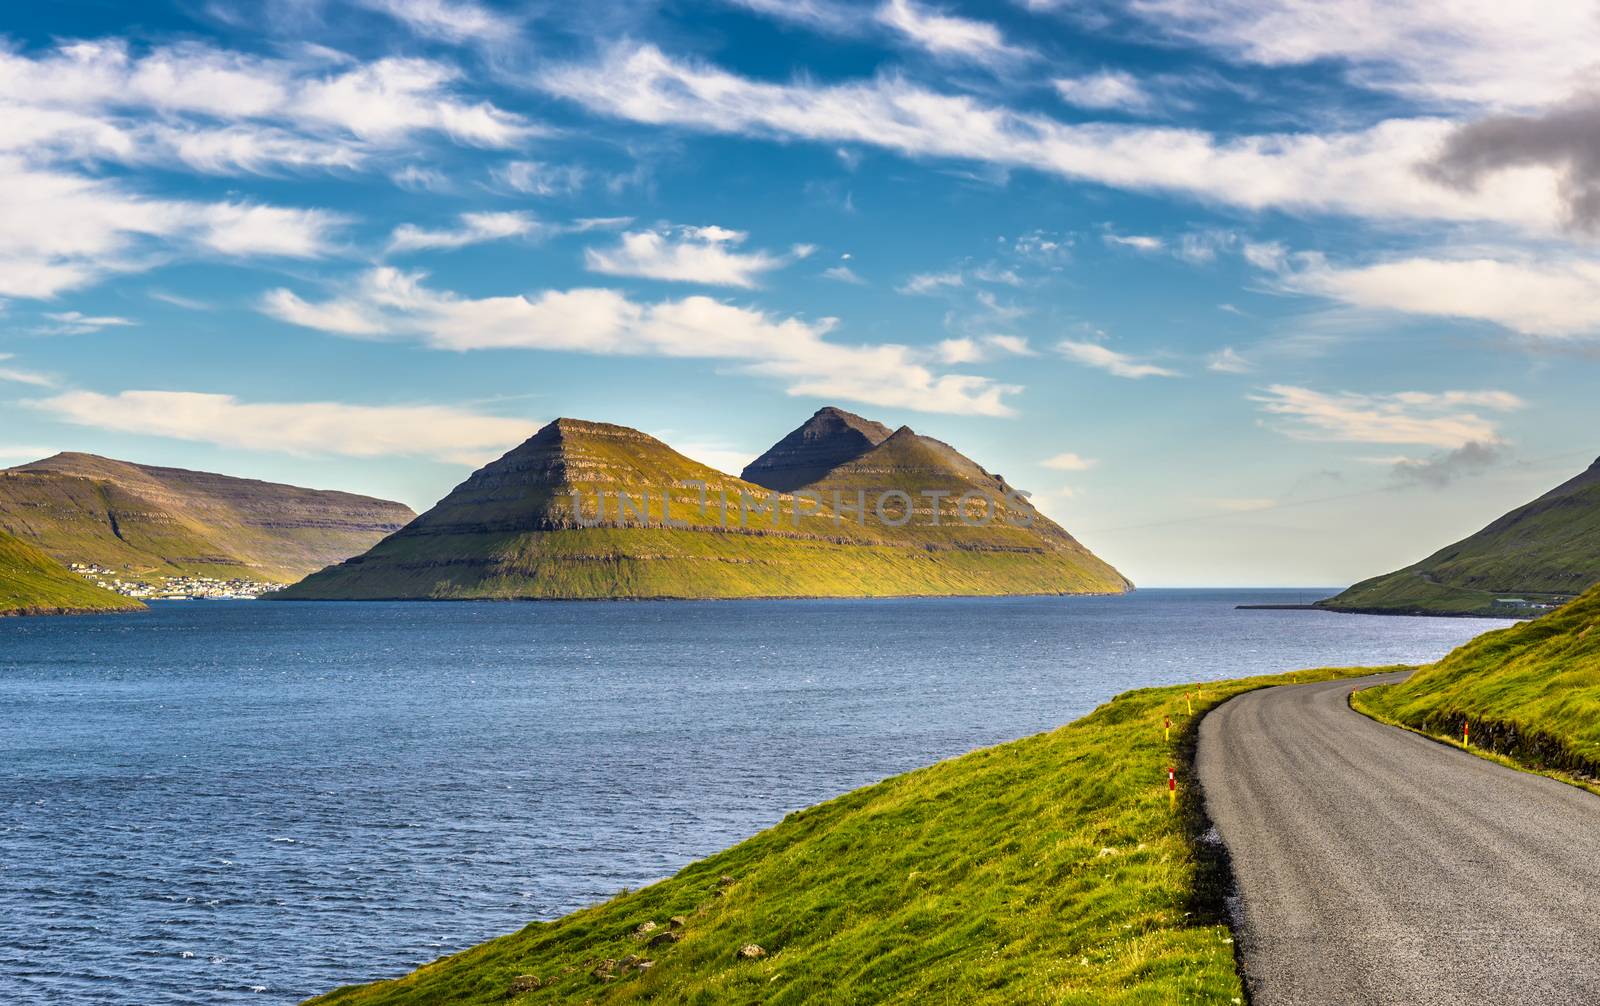 Island of Bordoy viewed from island of Kalsoy, Faroe Islands by nickfox